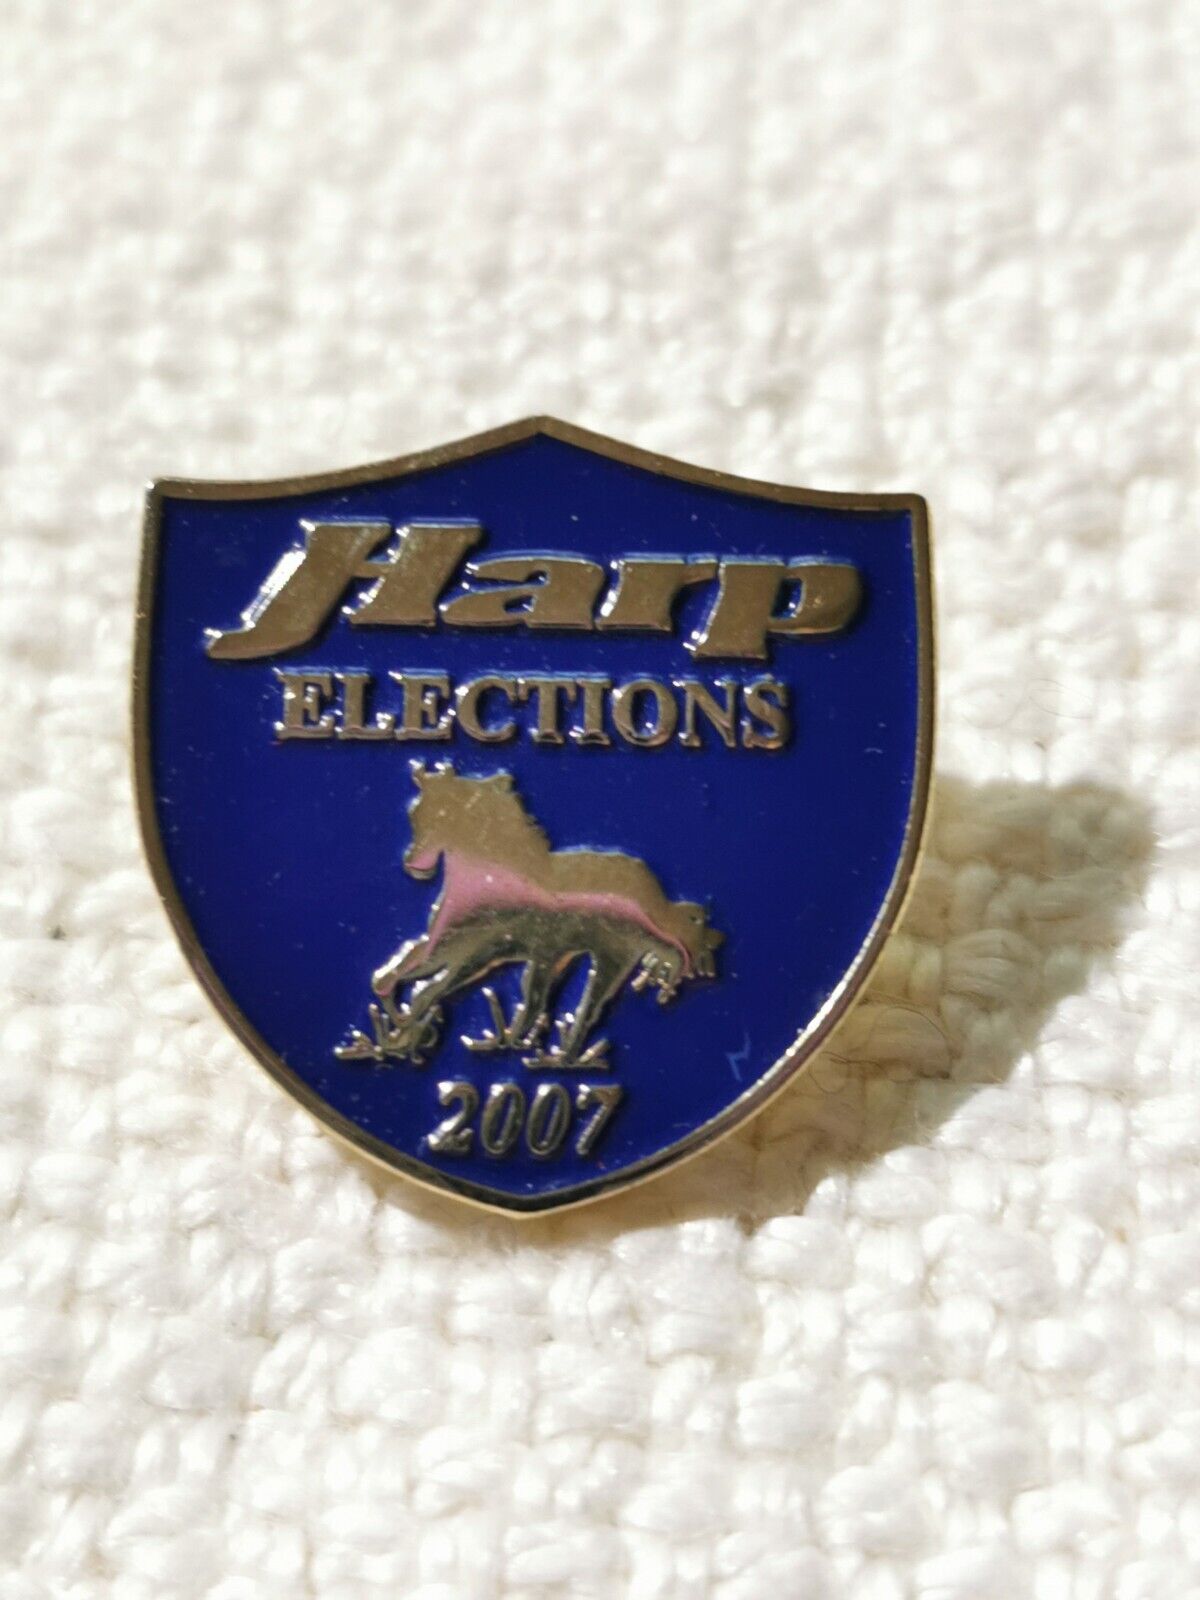 Rare 2007 Harp Elections Pin Pinback lapel